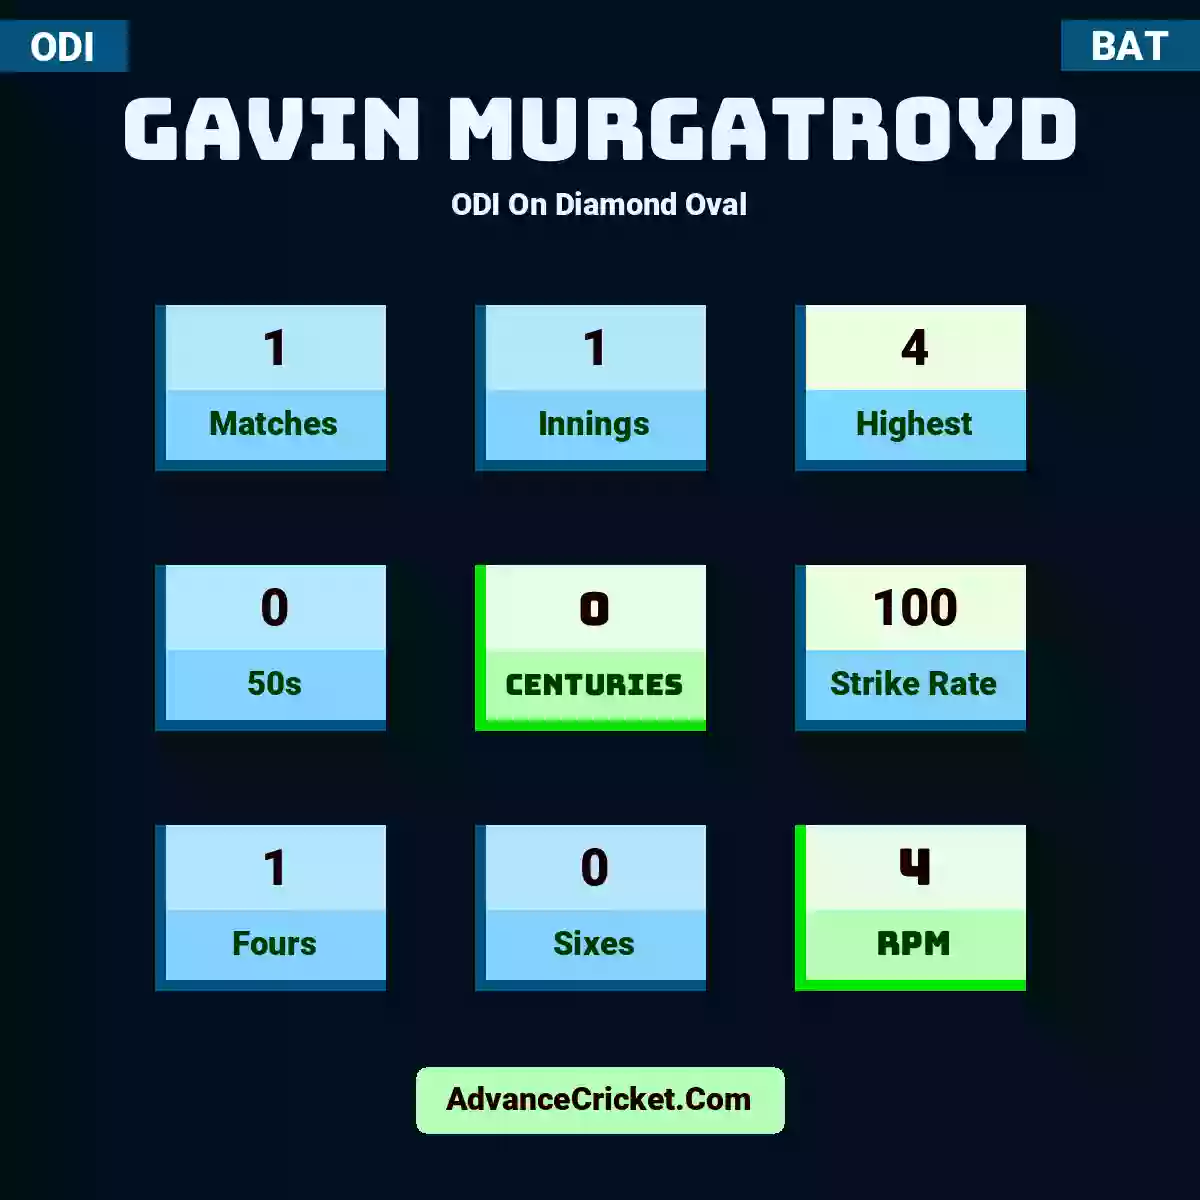 Gavin Murgatroyd ODI  On Diamond Oval, Gavin Murgatroyd played 1 matches, scored 4 runs as highest, 0 half-centuries, and 0 centuries, with a strike rate of 100. G.Murgatroyd hit 1 fours and 0 sixes, with an RPM of 4.